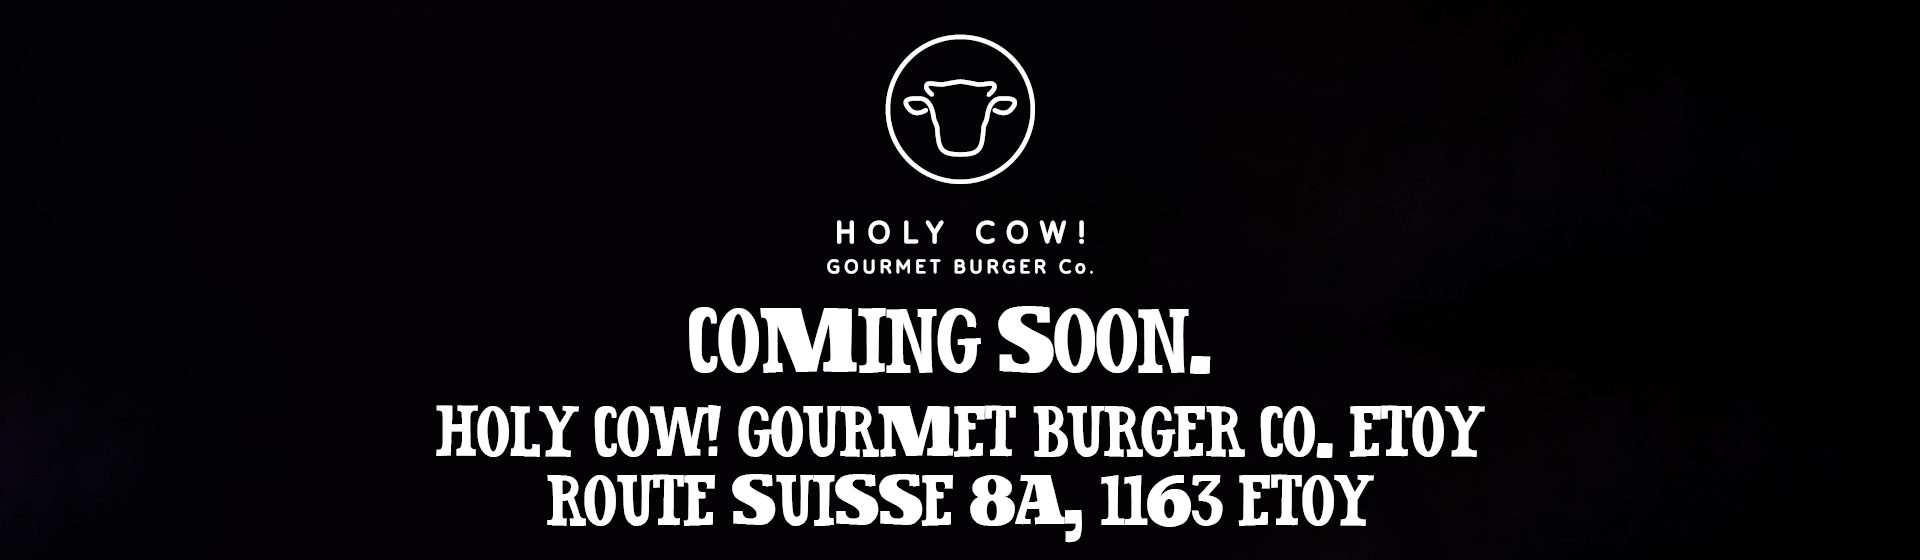 Restaurant Holy Cow!